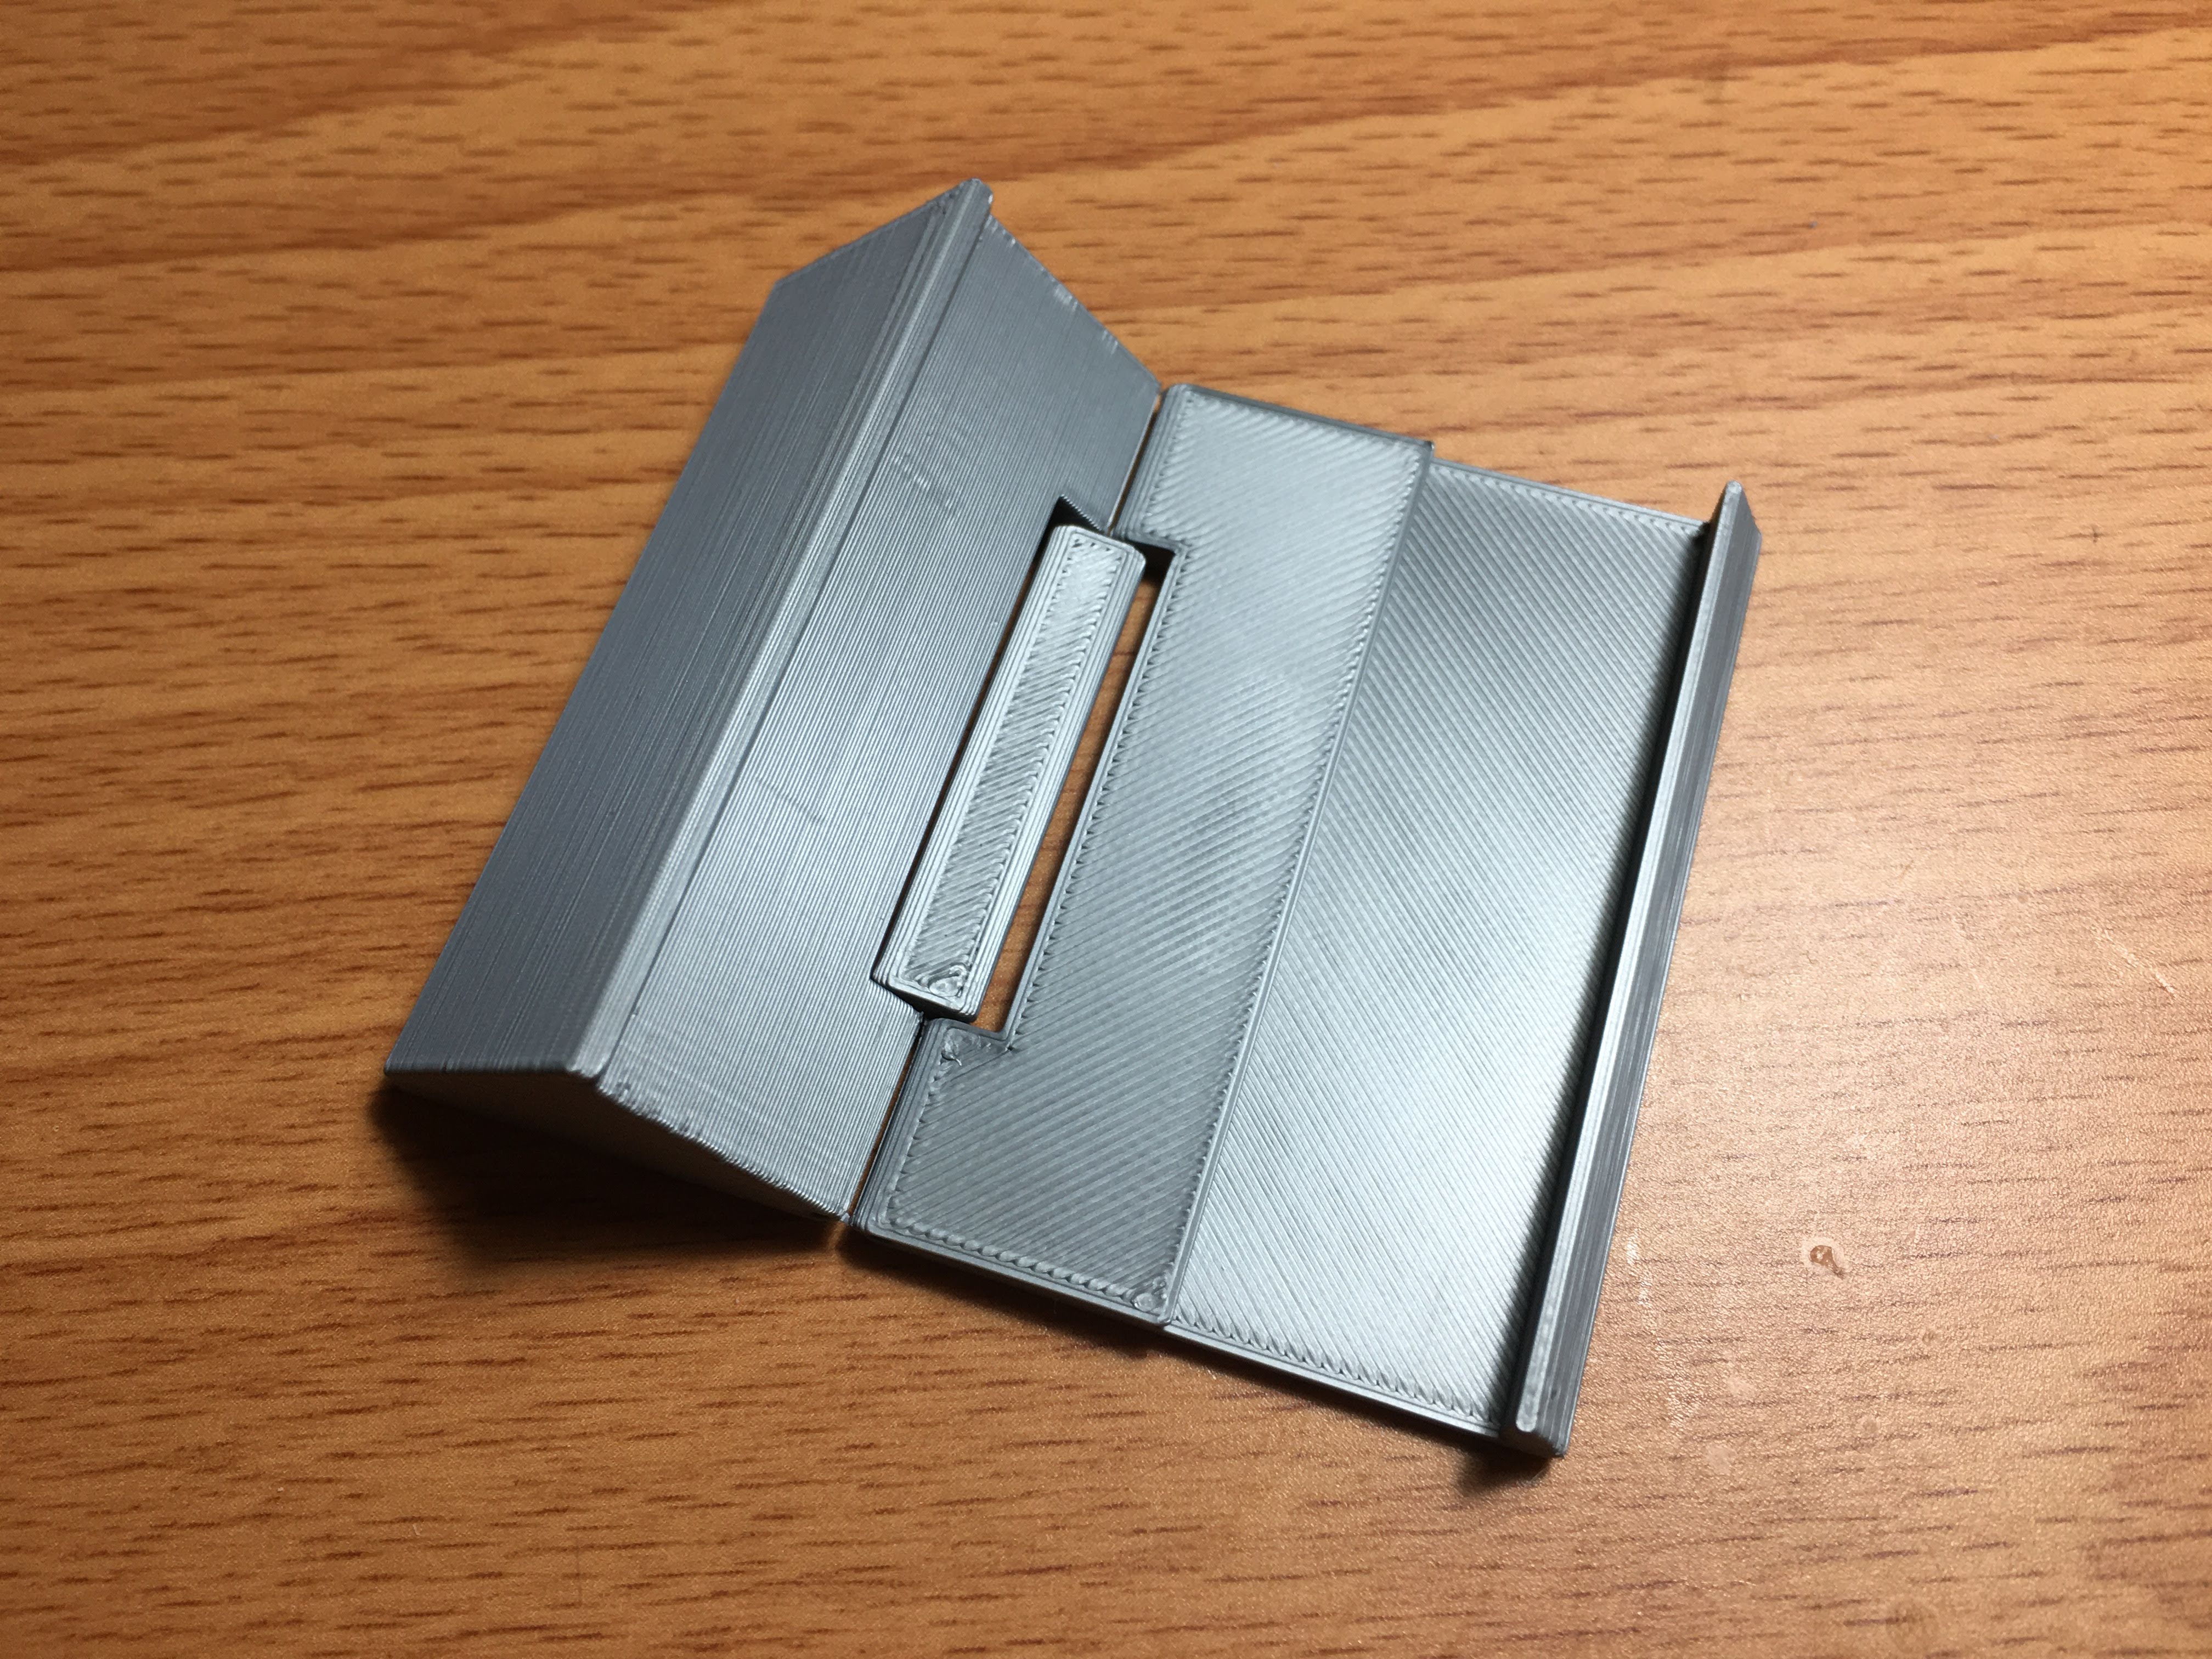 Magnet fold phone stand holder